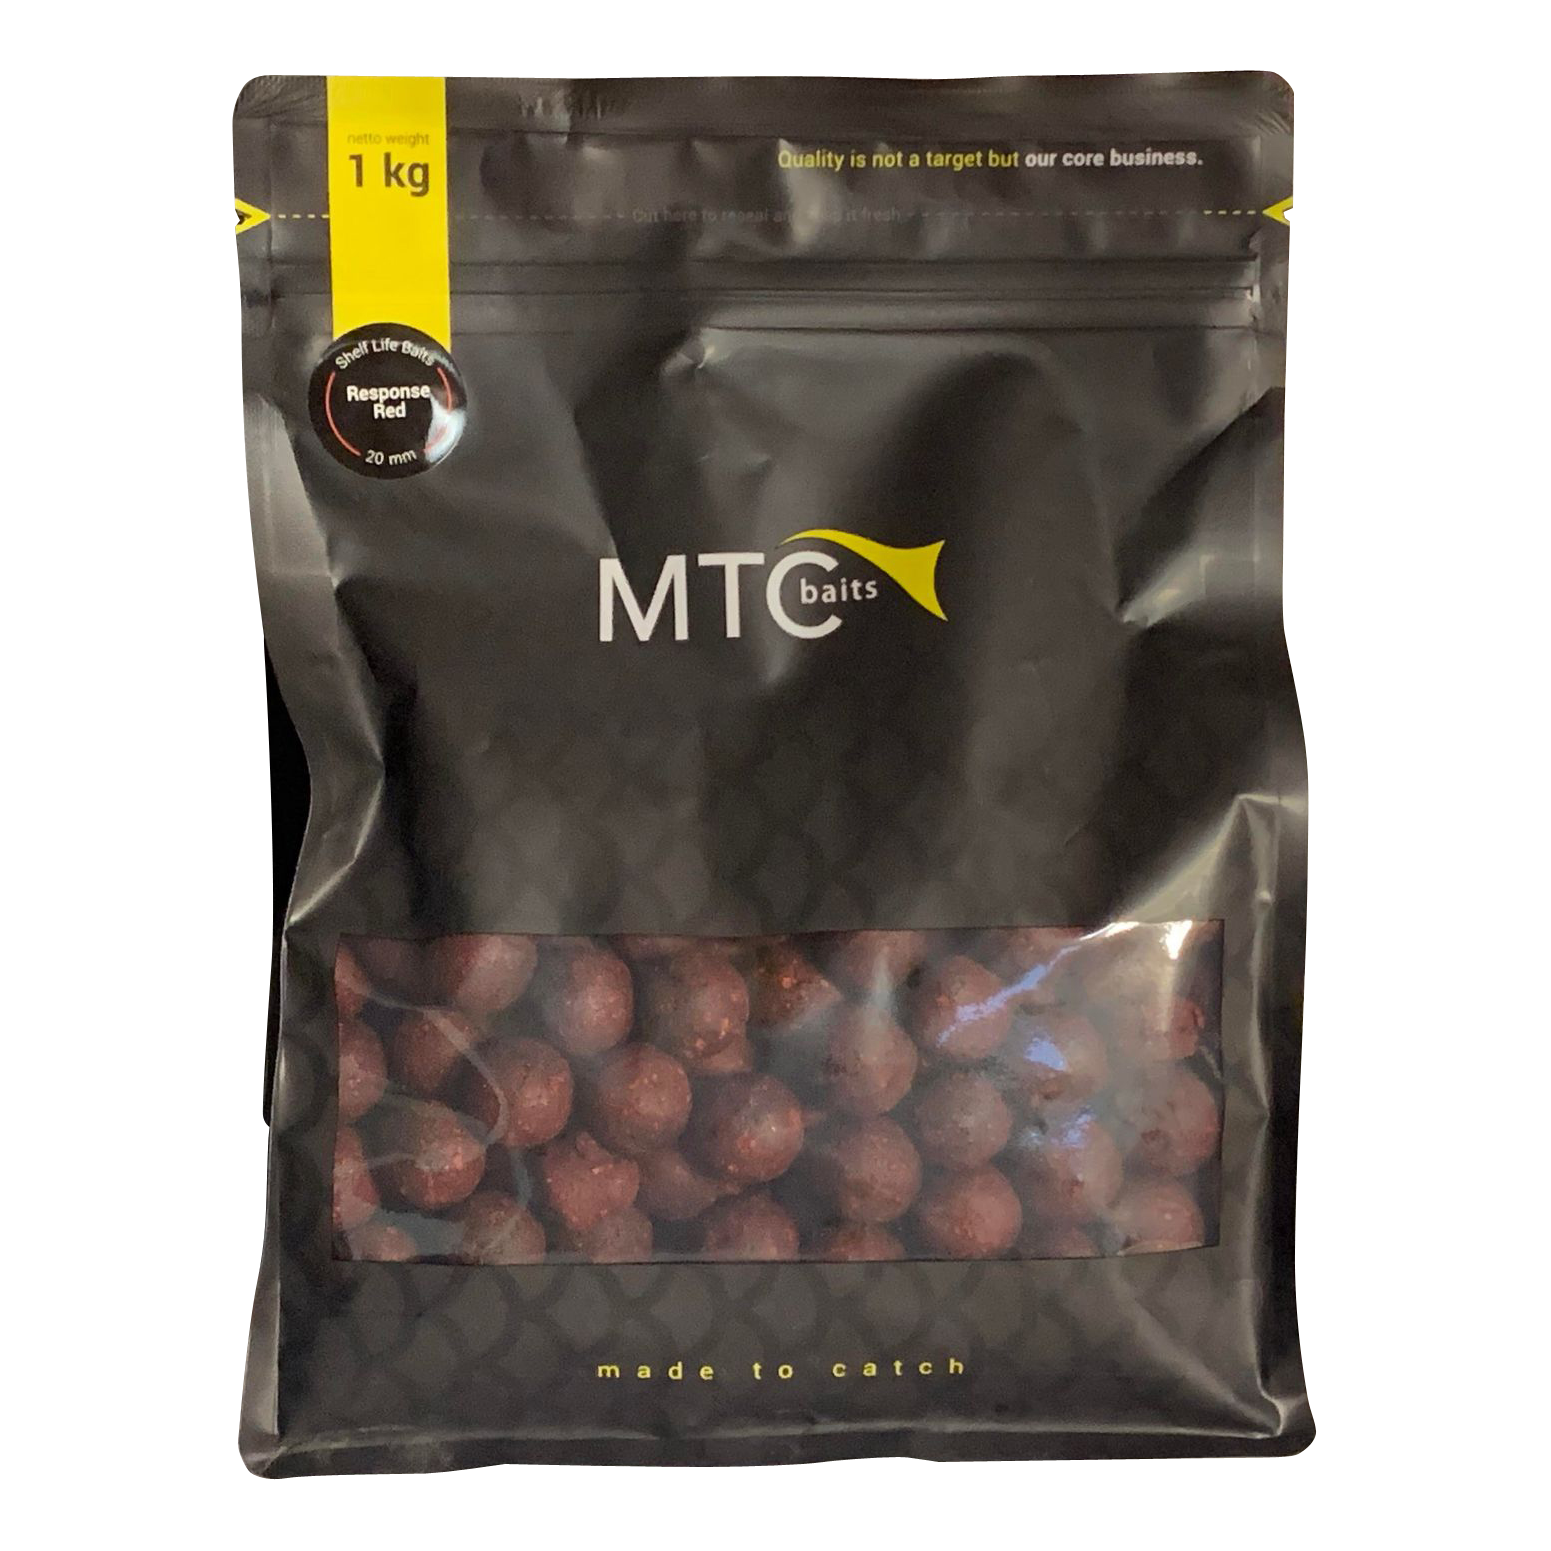 MTC Baits Readymades Response Red 5 kg